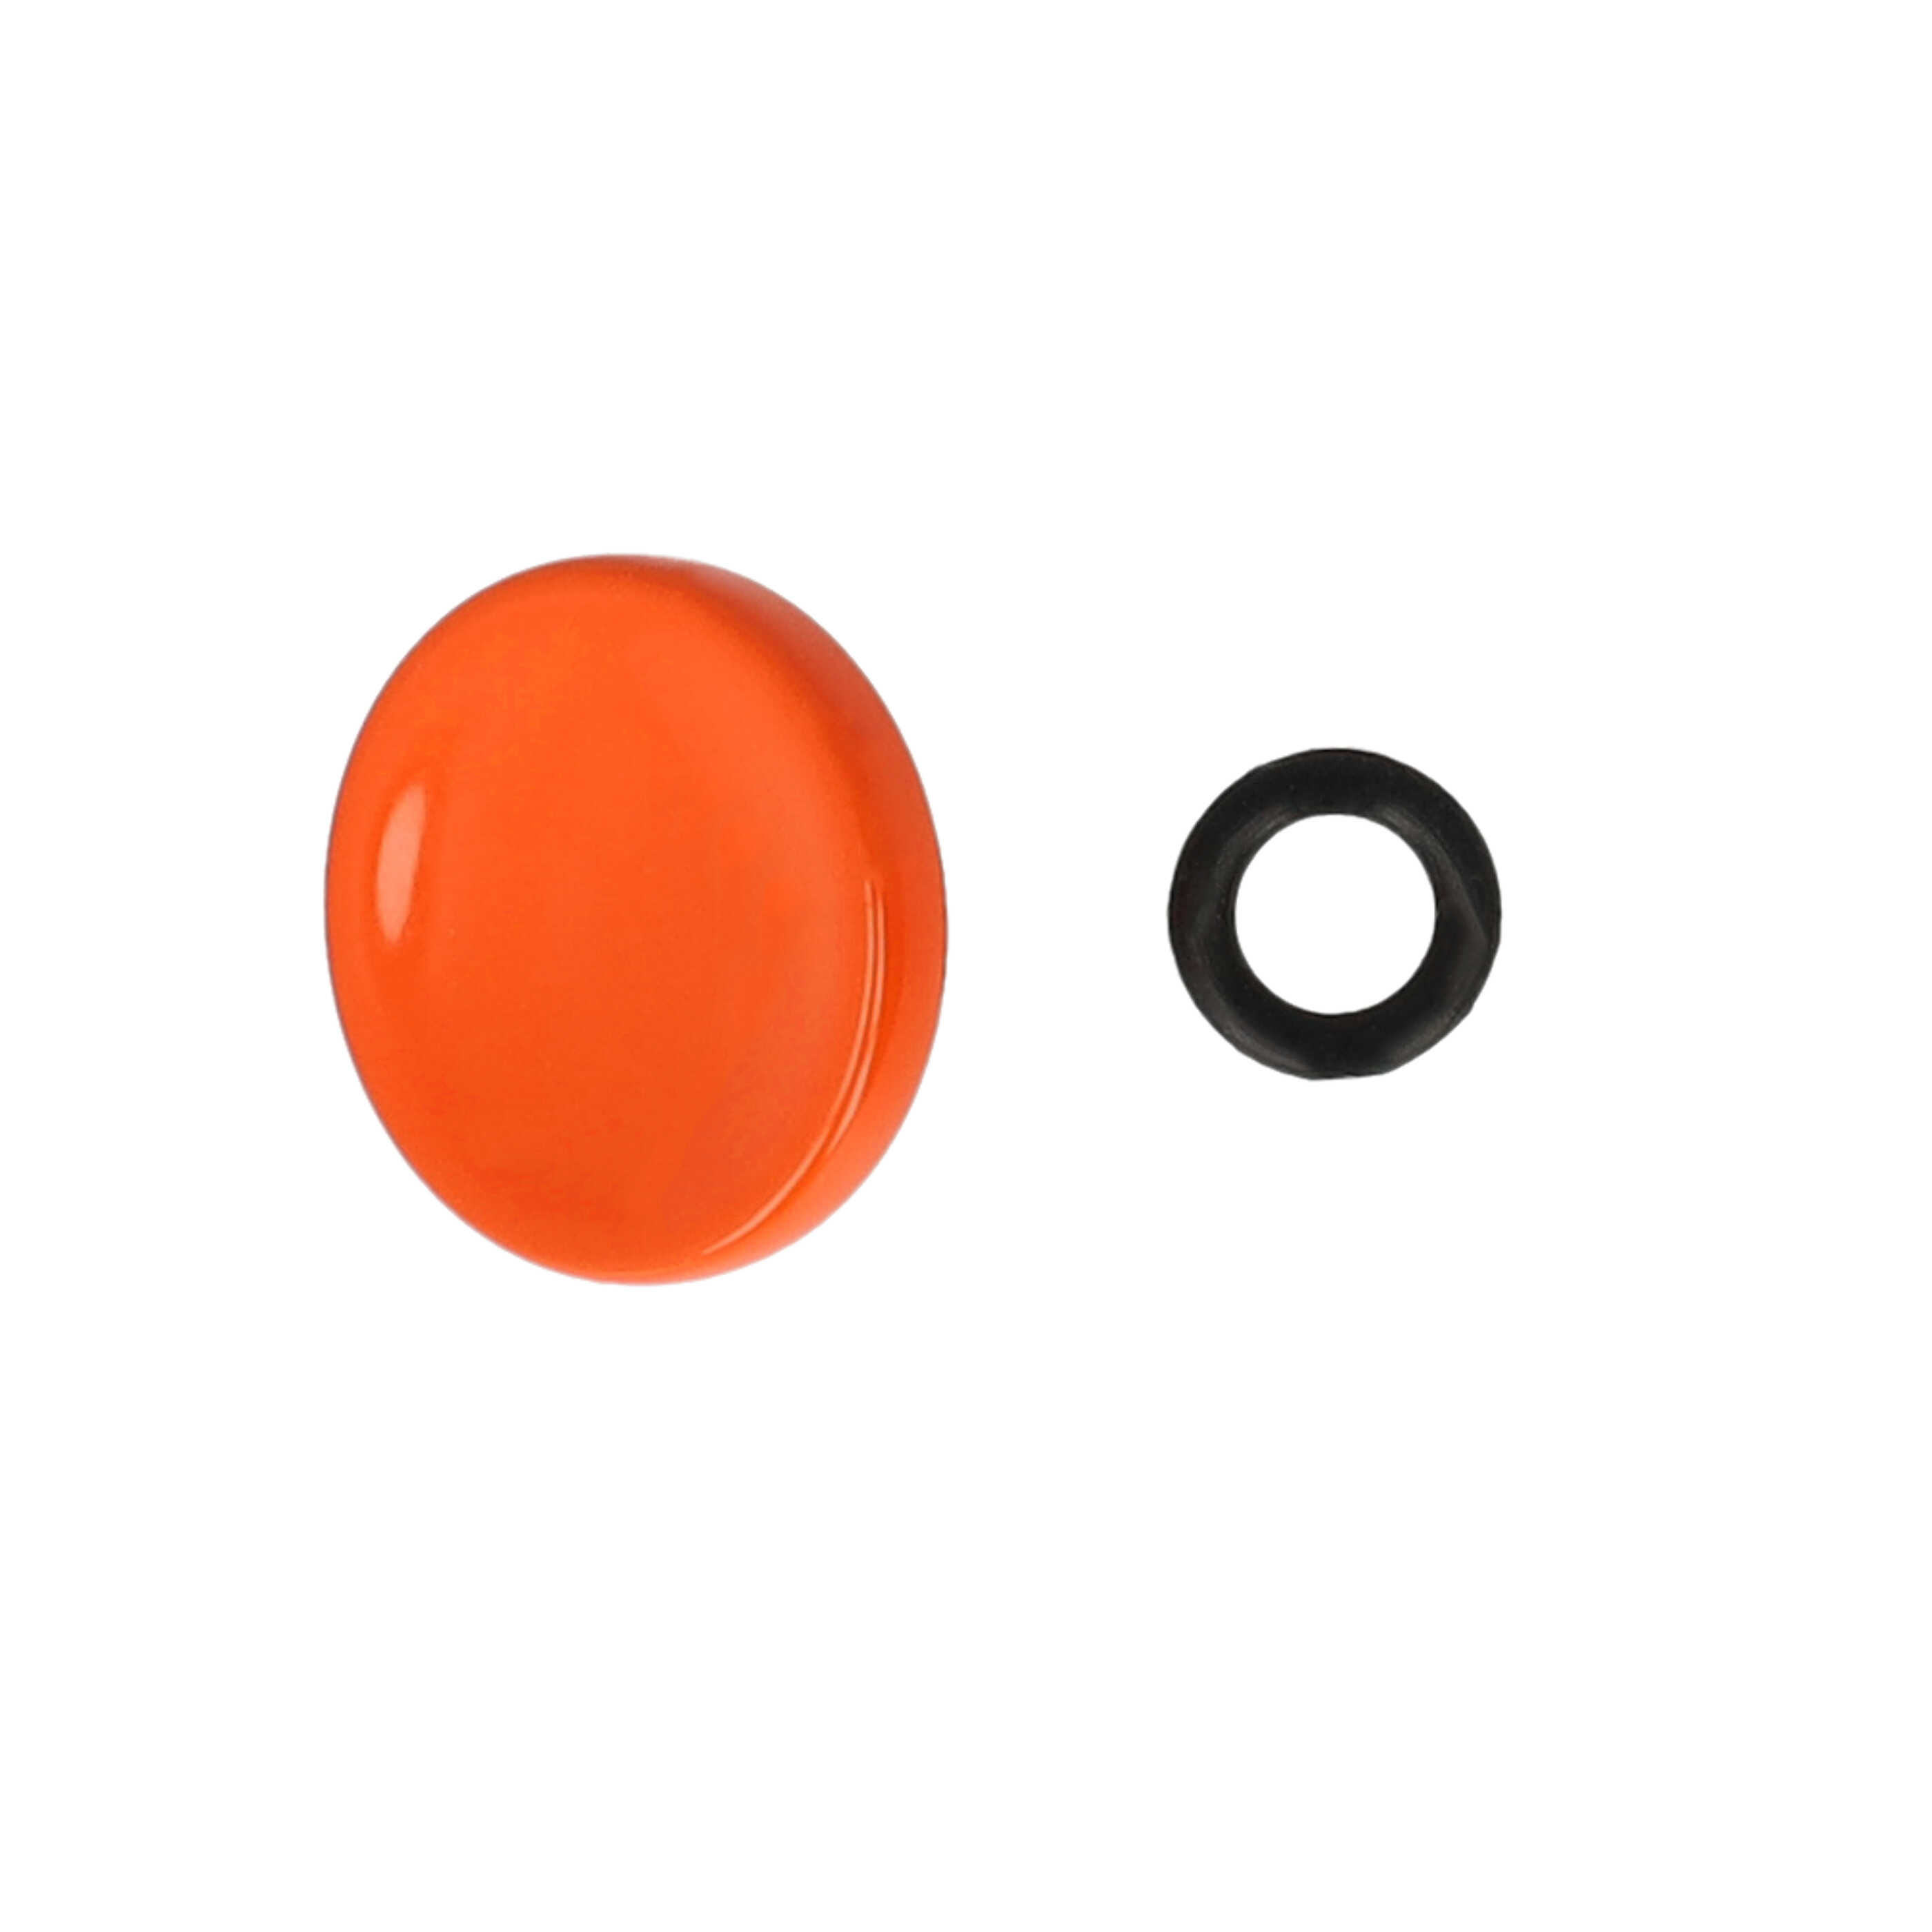 Release Button suitable for X-E1 FujifilmCamera etc. - Metal, Orange